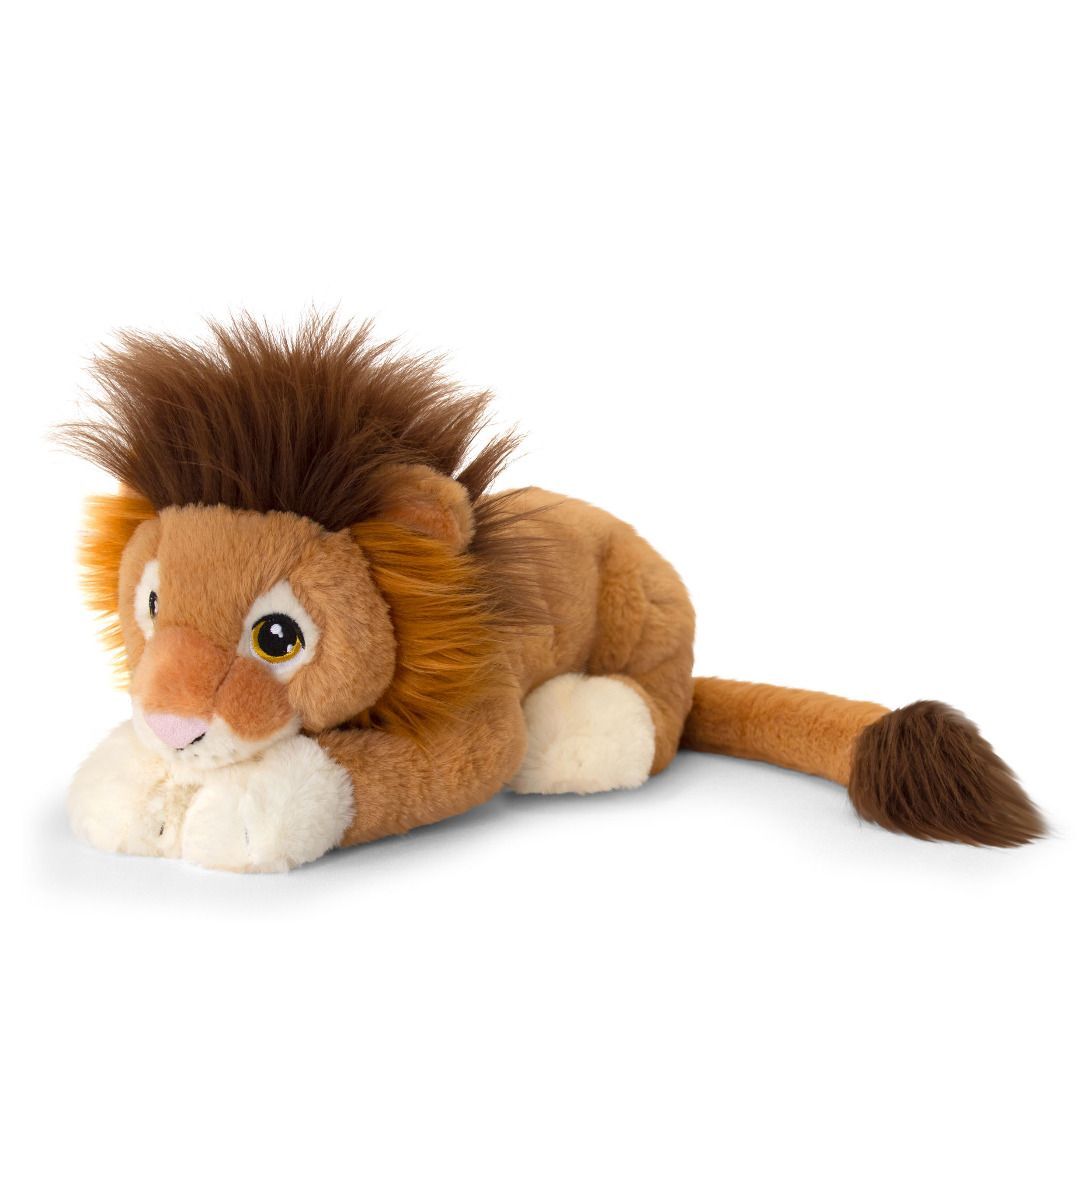 Keeleco 35cm Lion Kids/Children/Toddler Animal Soft Plush Stuffed Toy Brown 3y+